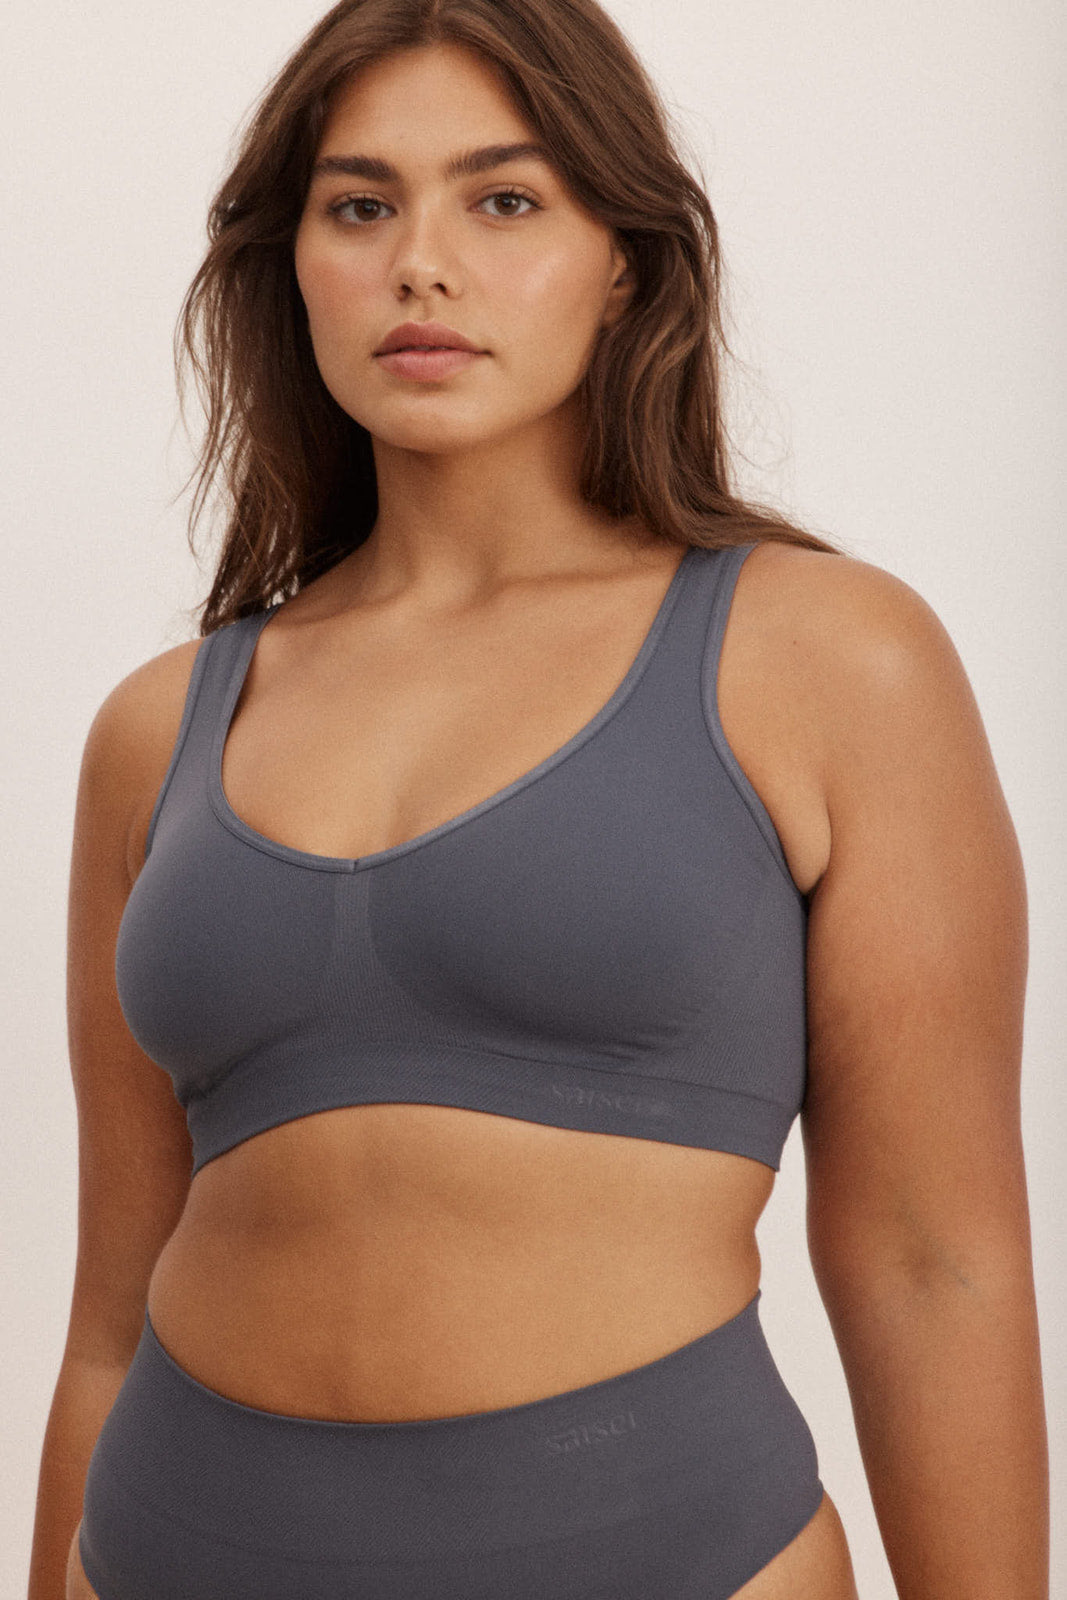 Popular Basics gray sports bra size Large